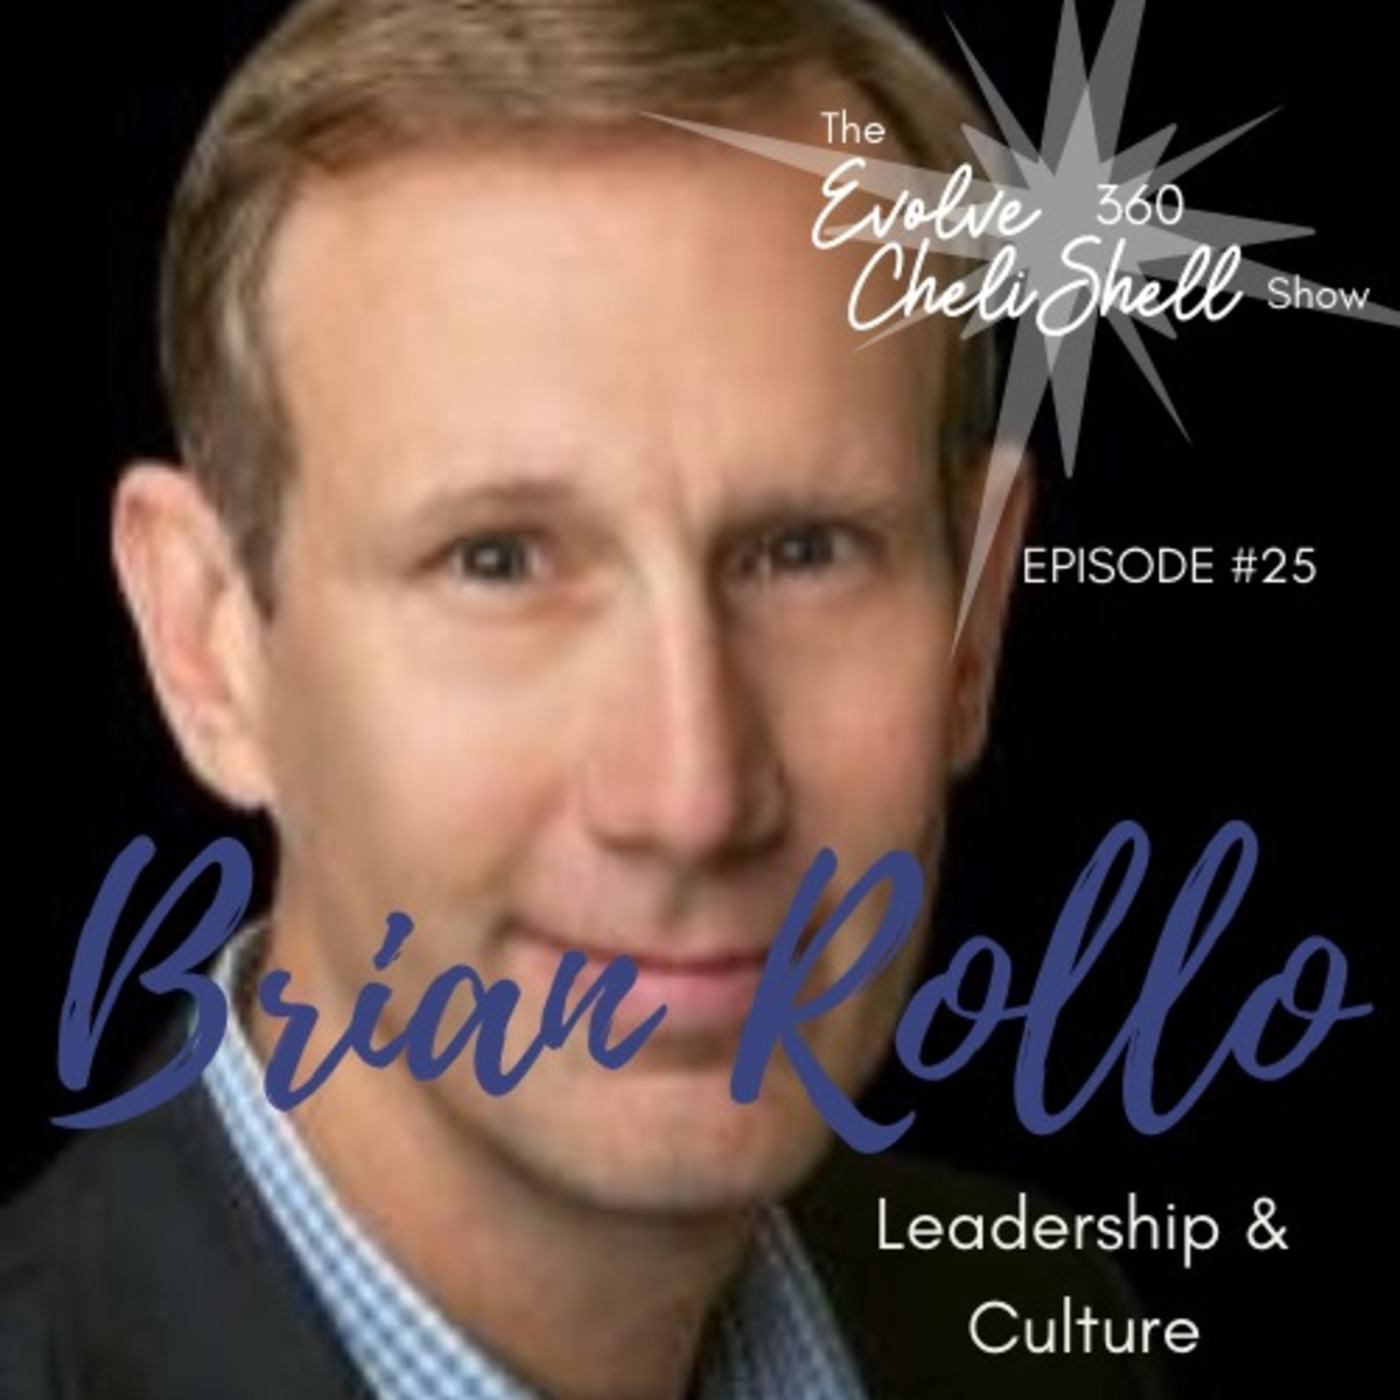 Episode 25: Evolve 360 Show #25 With Brian Rollo